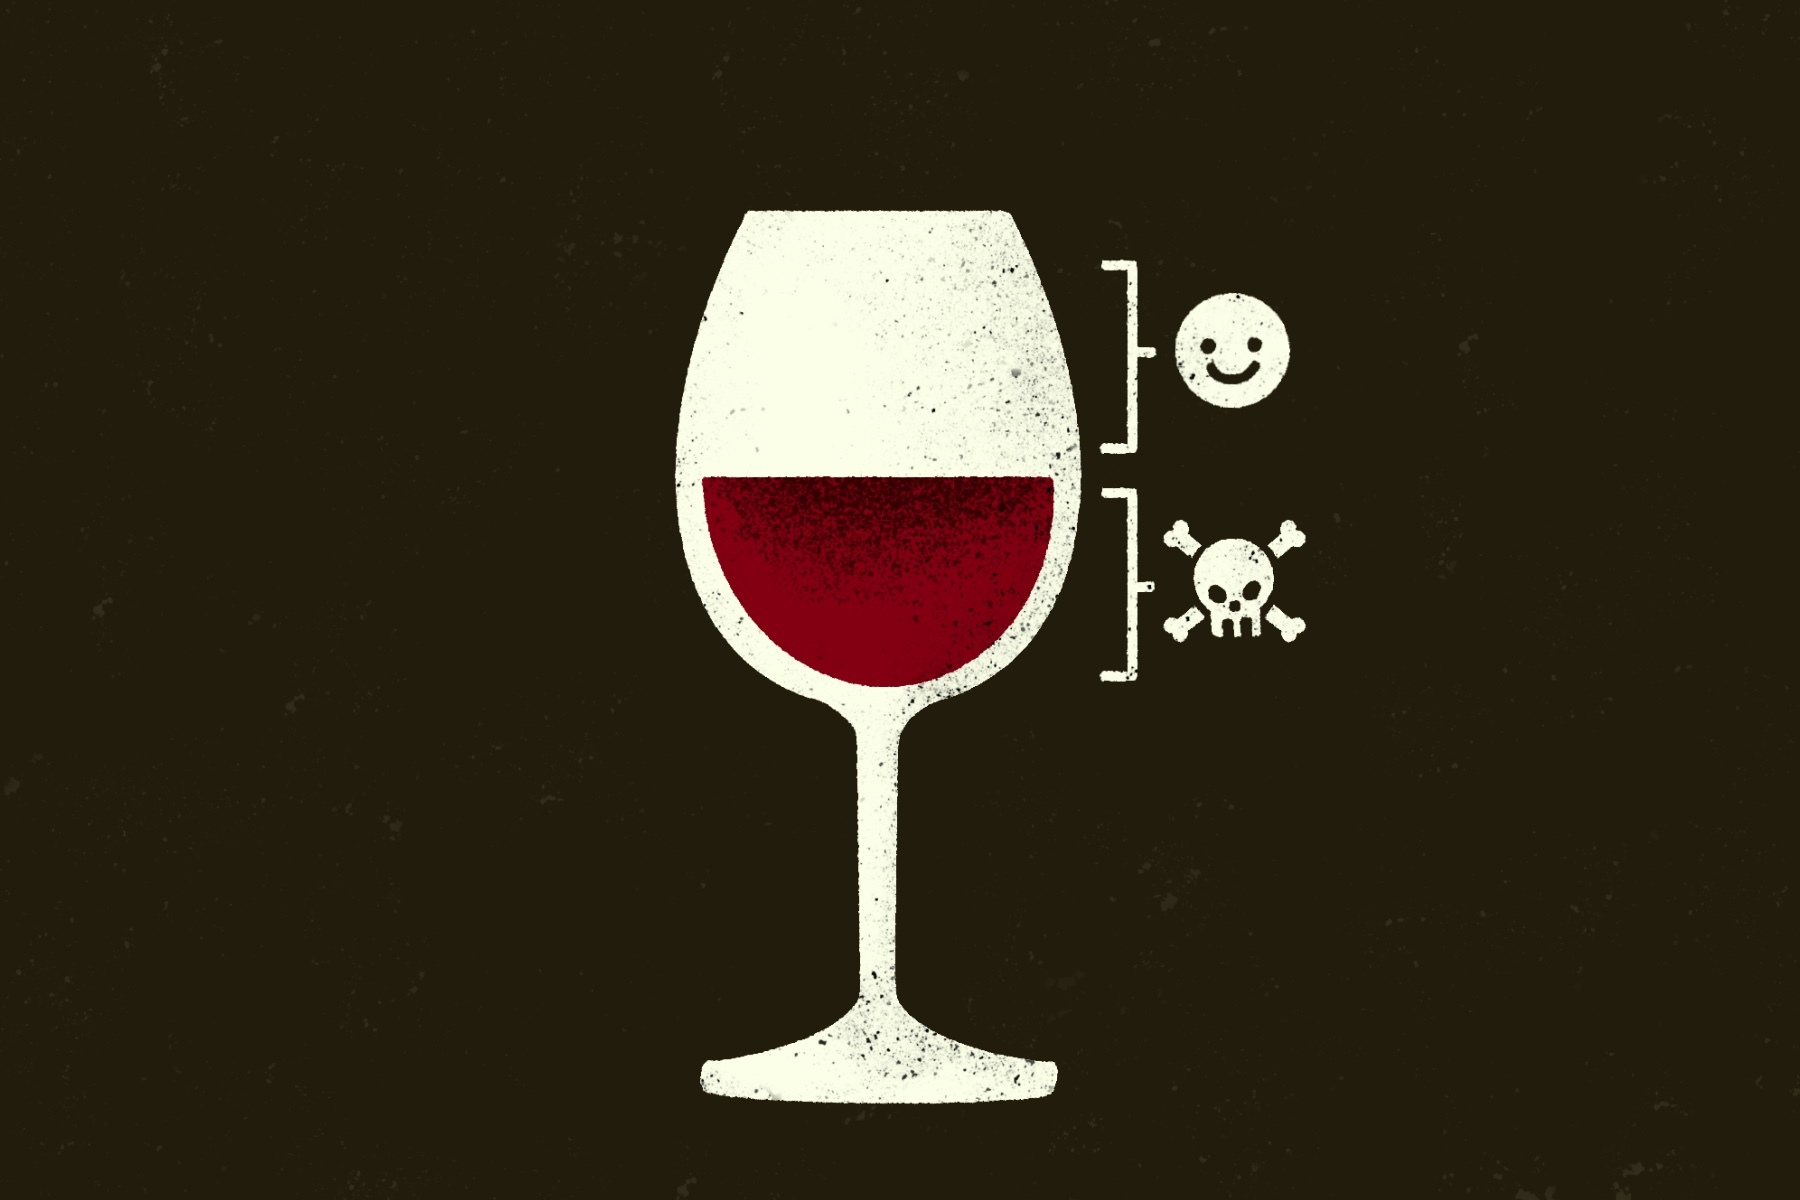 Stop Drinking Alone, by Edward Slingerland